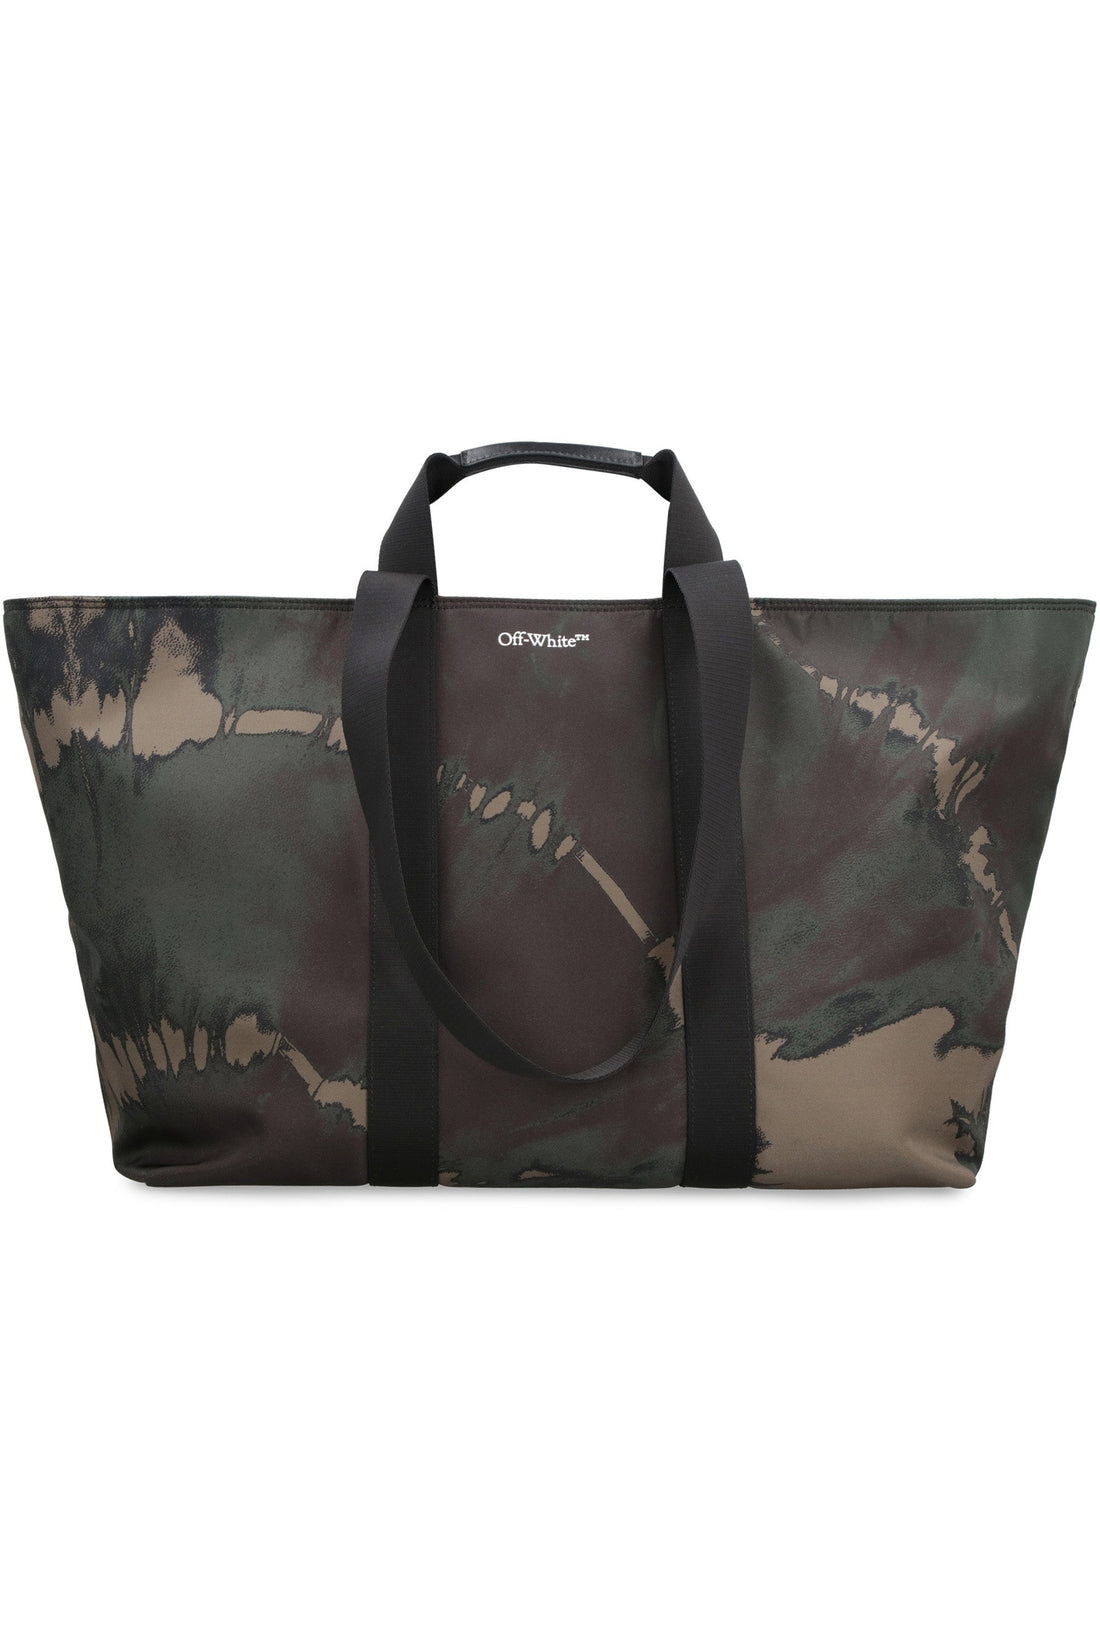 Off-White-OUTLET-SALE-Nylon travel bag-ARCHIVIST